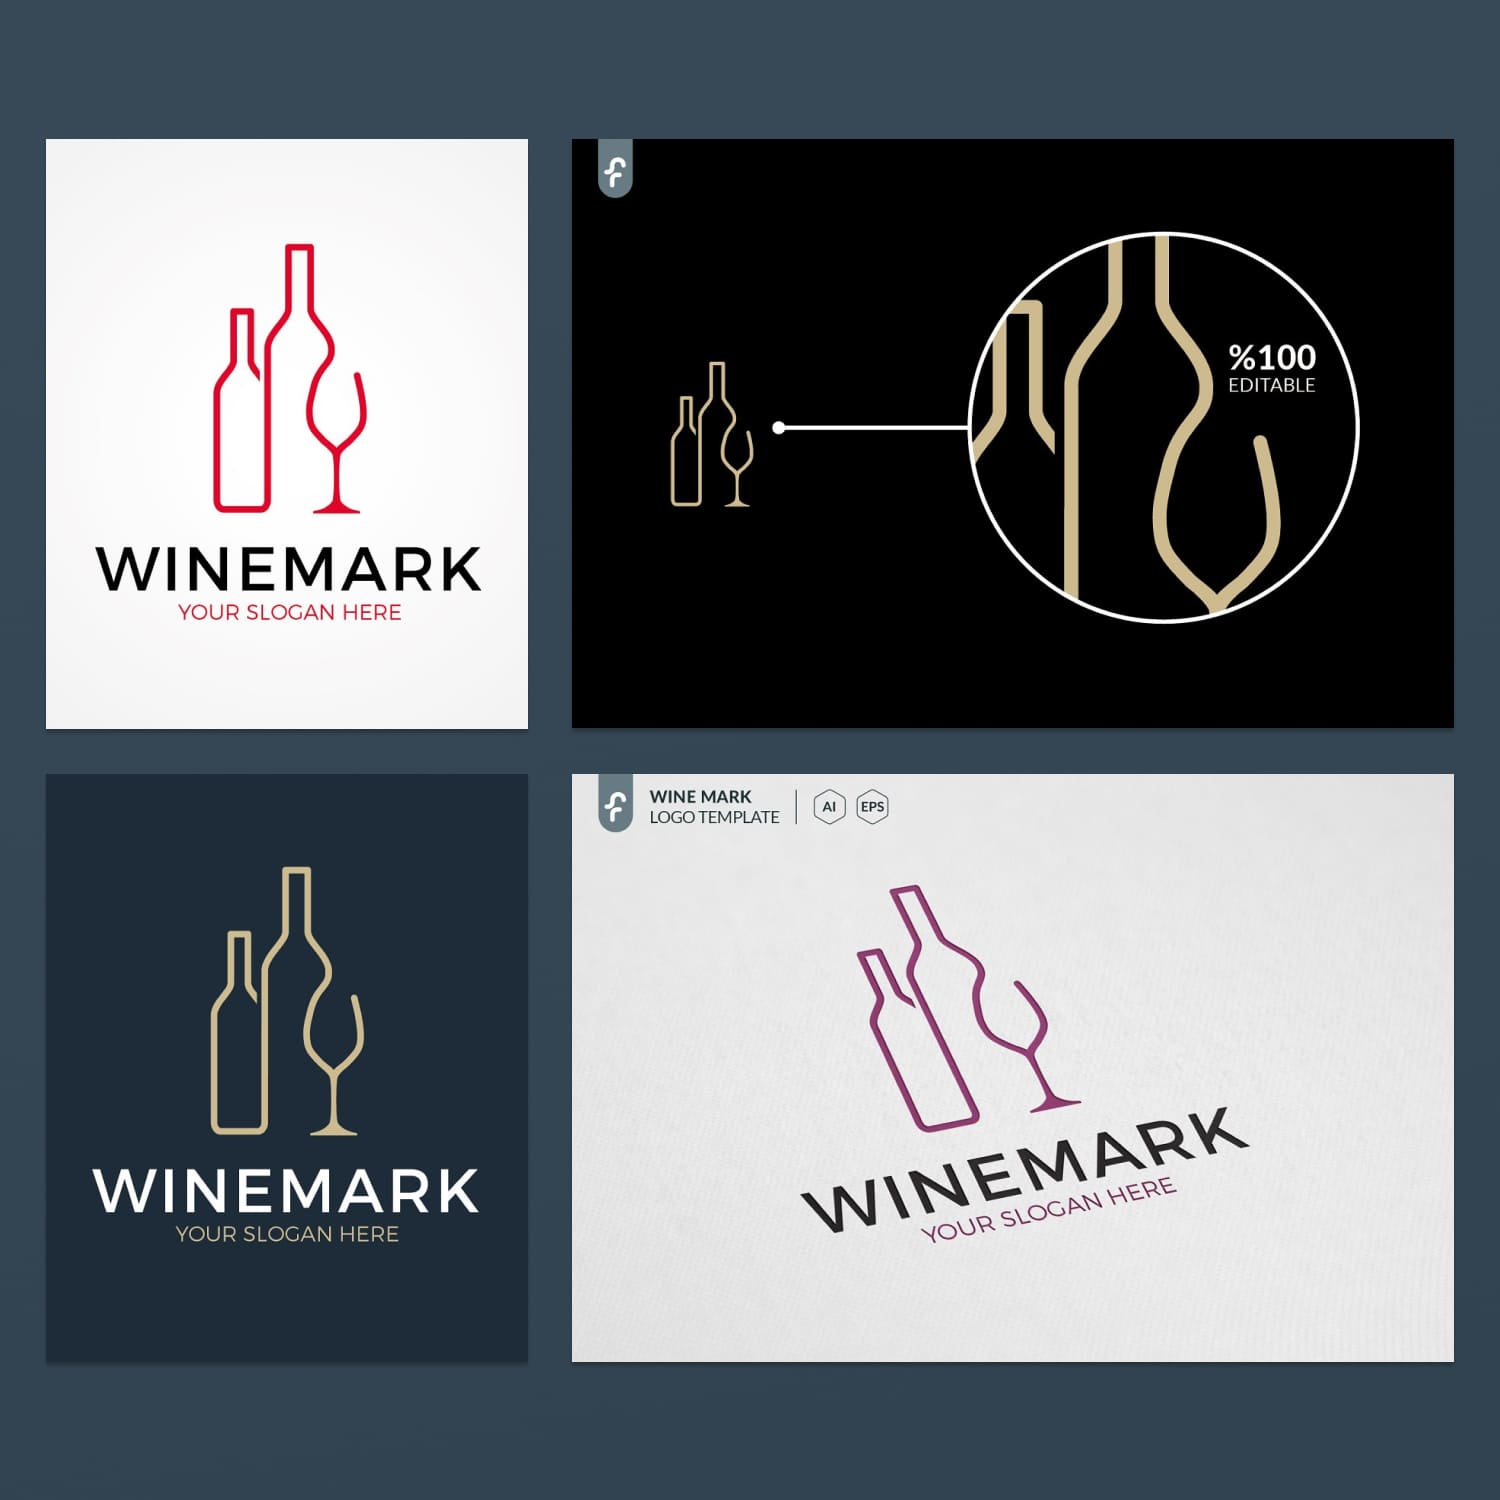 Wine Mark Logo is a minimalistic and modern logo.